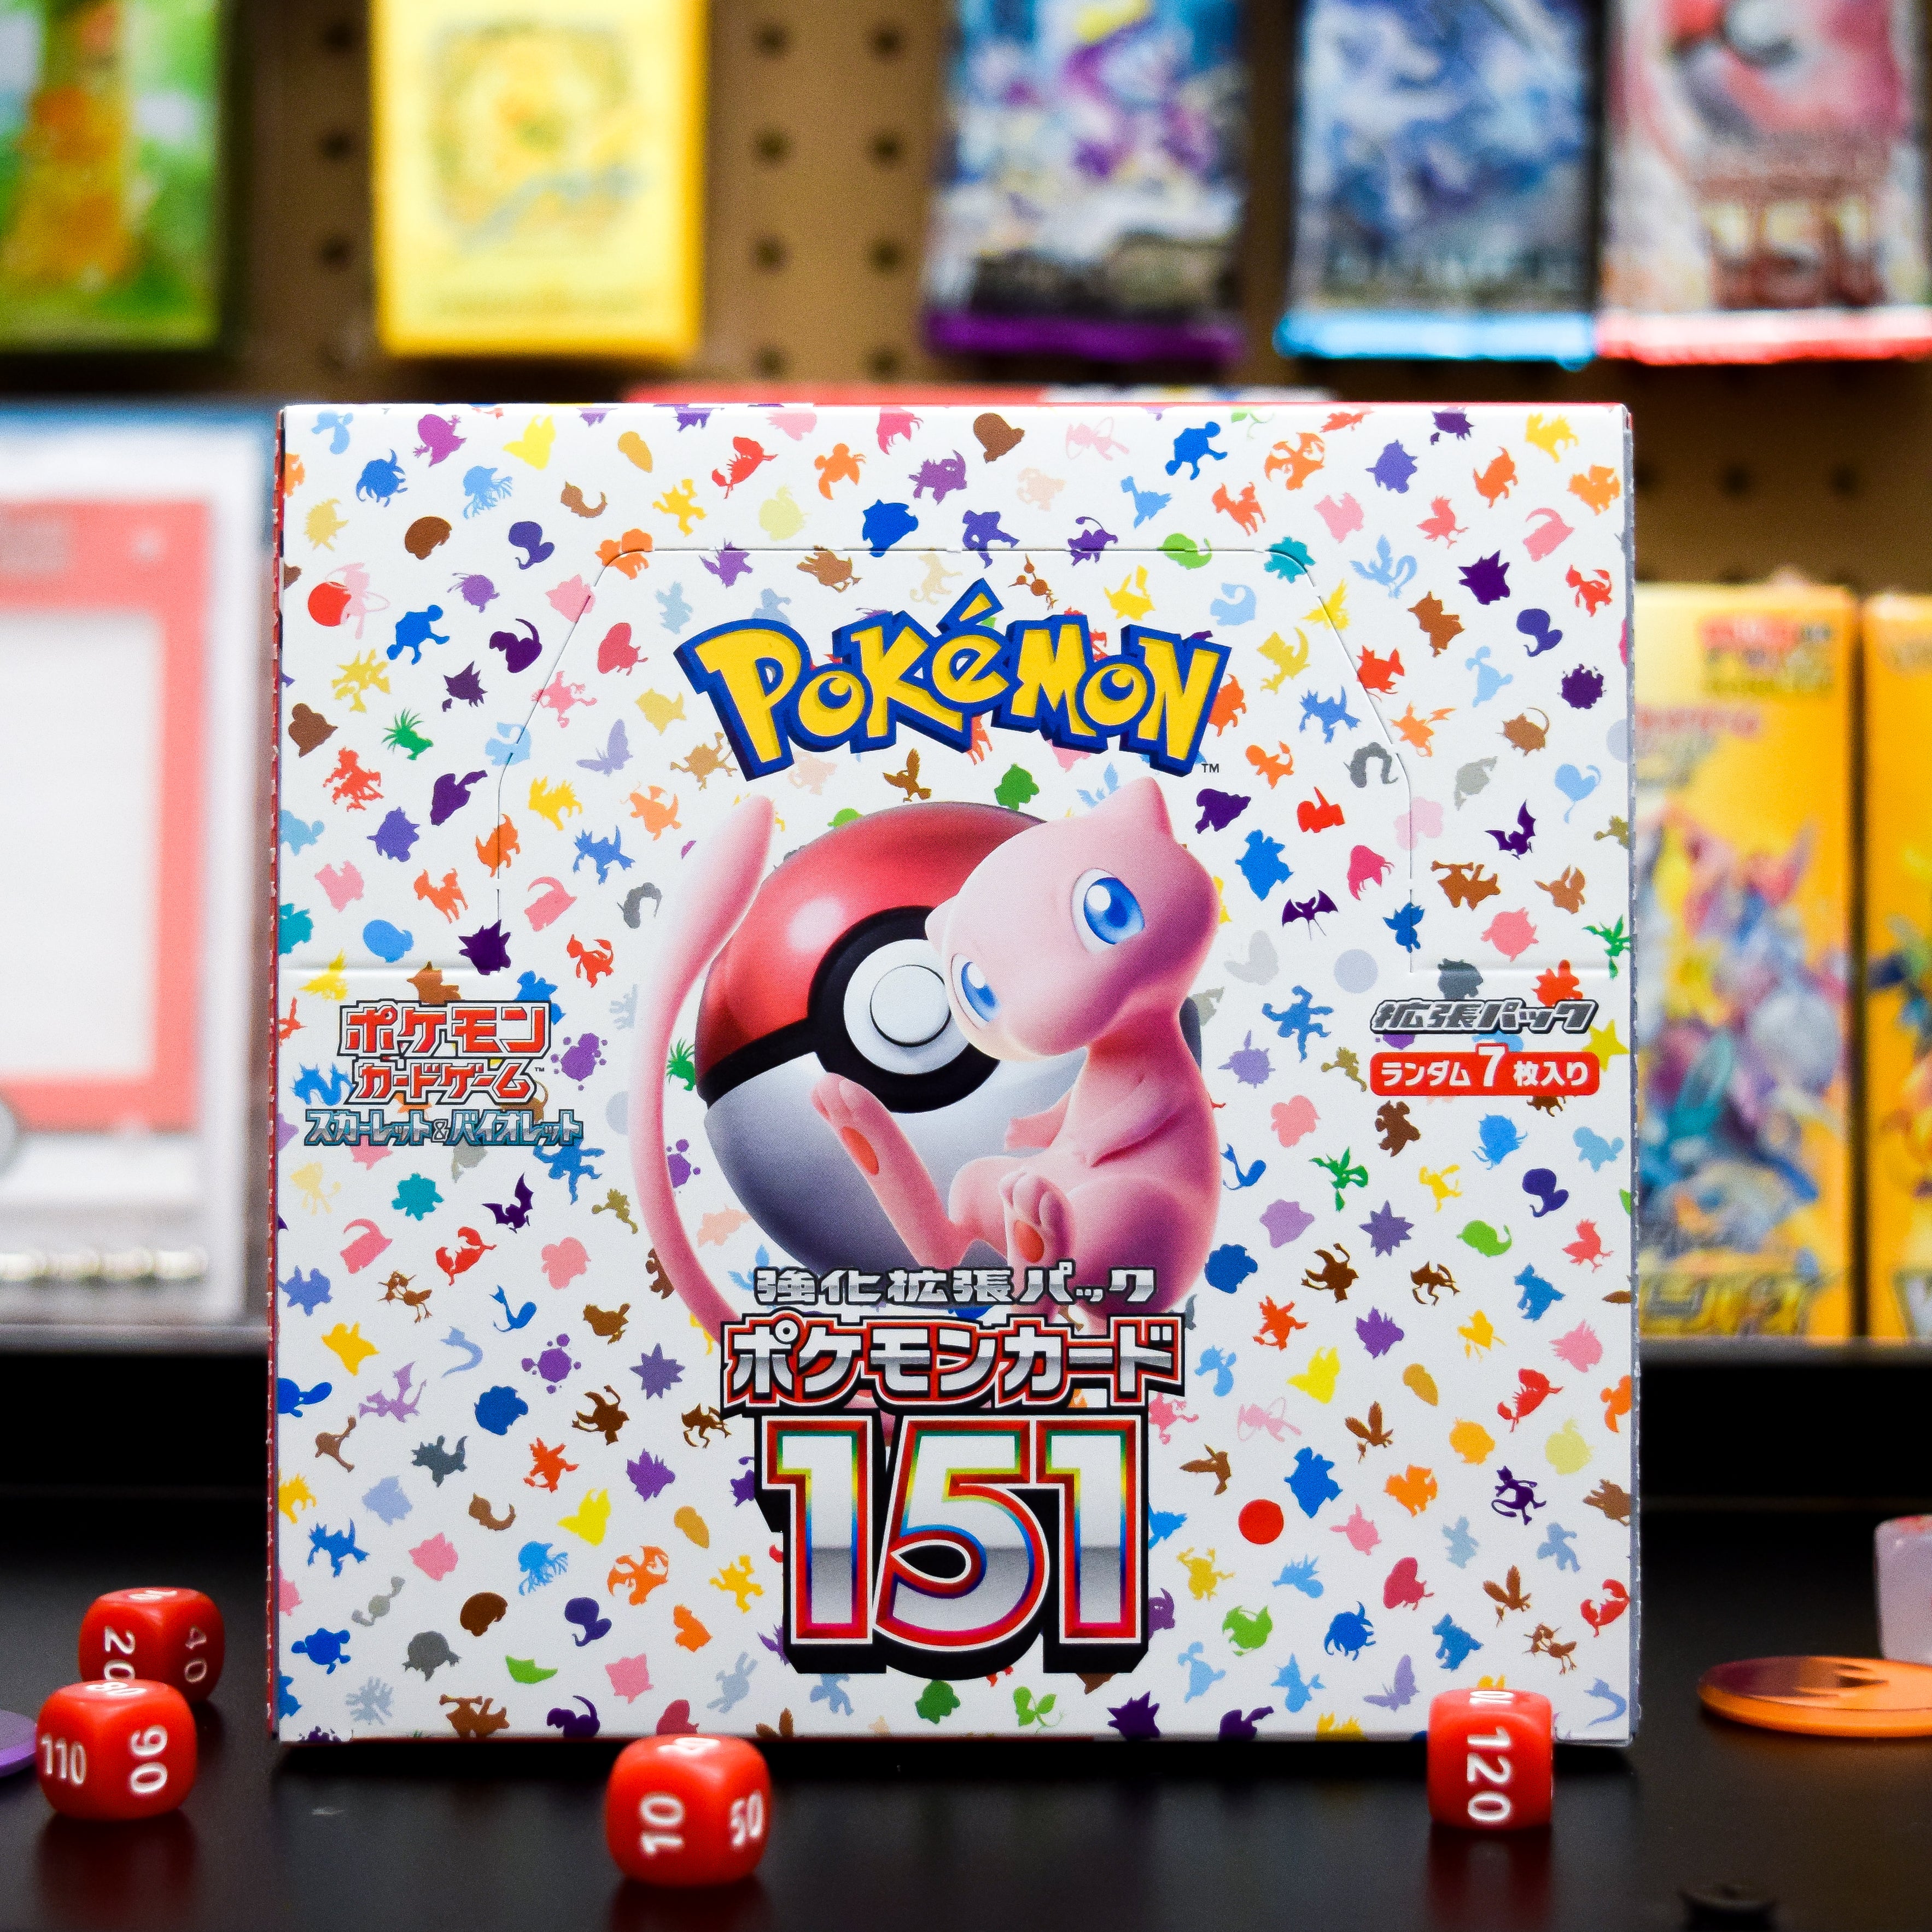 Pokemon 151 Booster Box (ポケモンカード151) [SV2A] – Moxie Card Shop